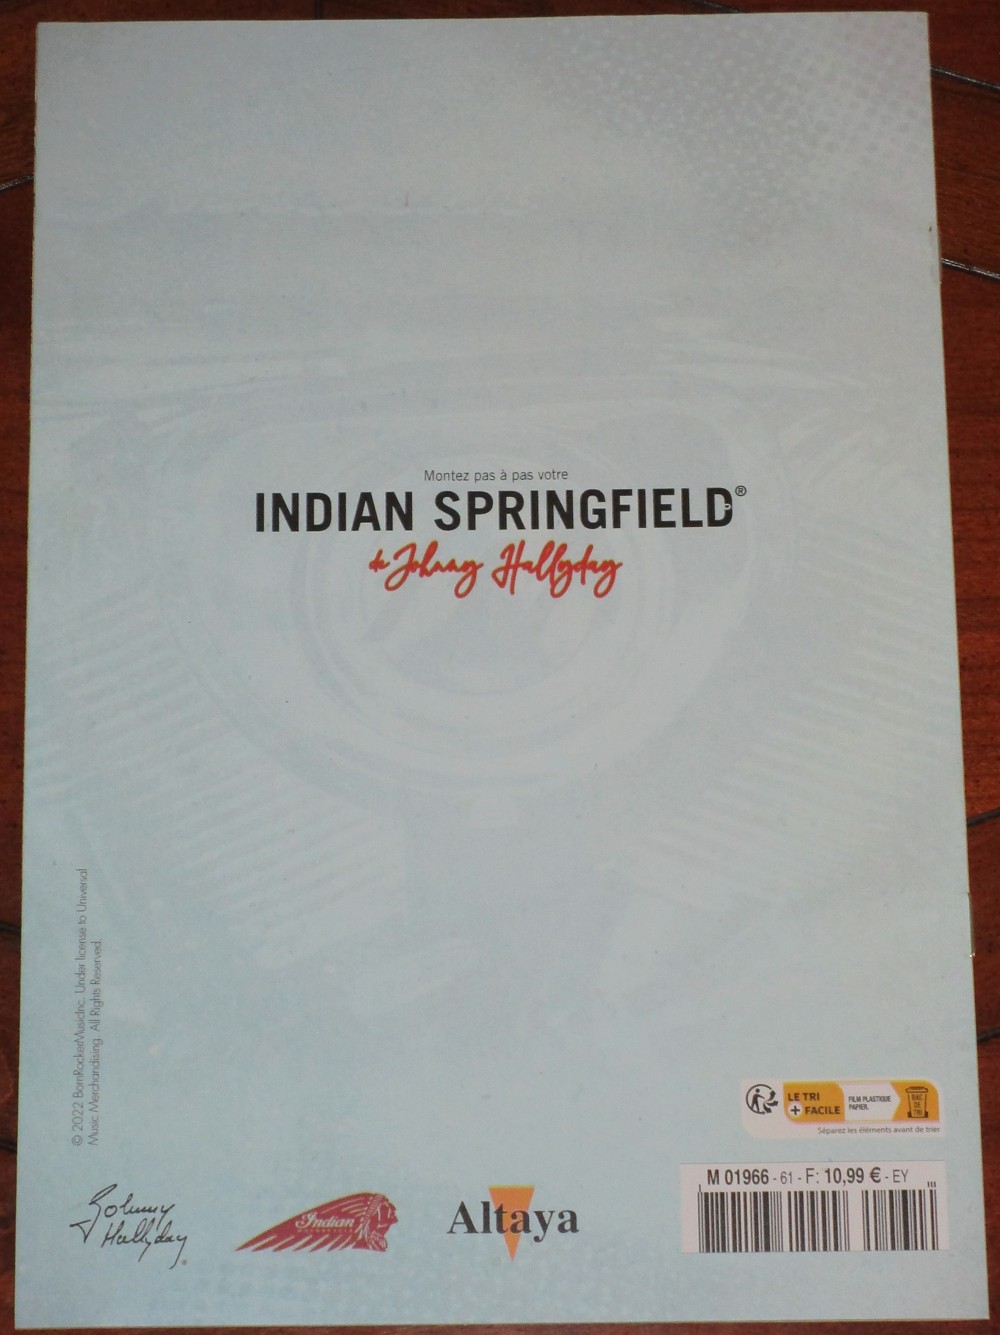 Altaya:Indian Springfield de JH n°61 021-a186